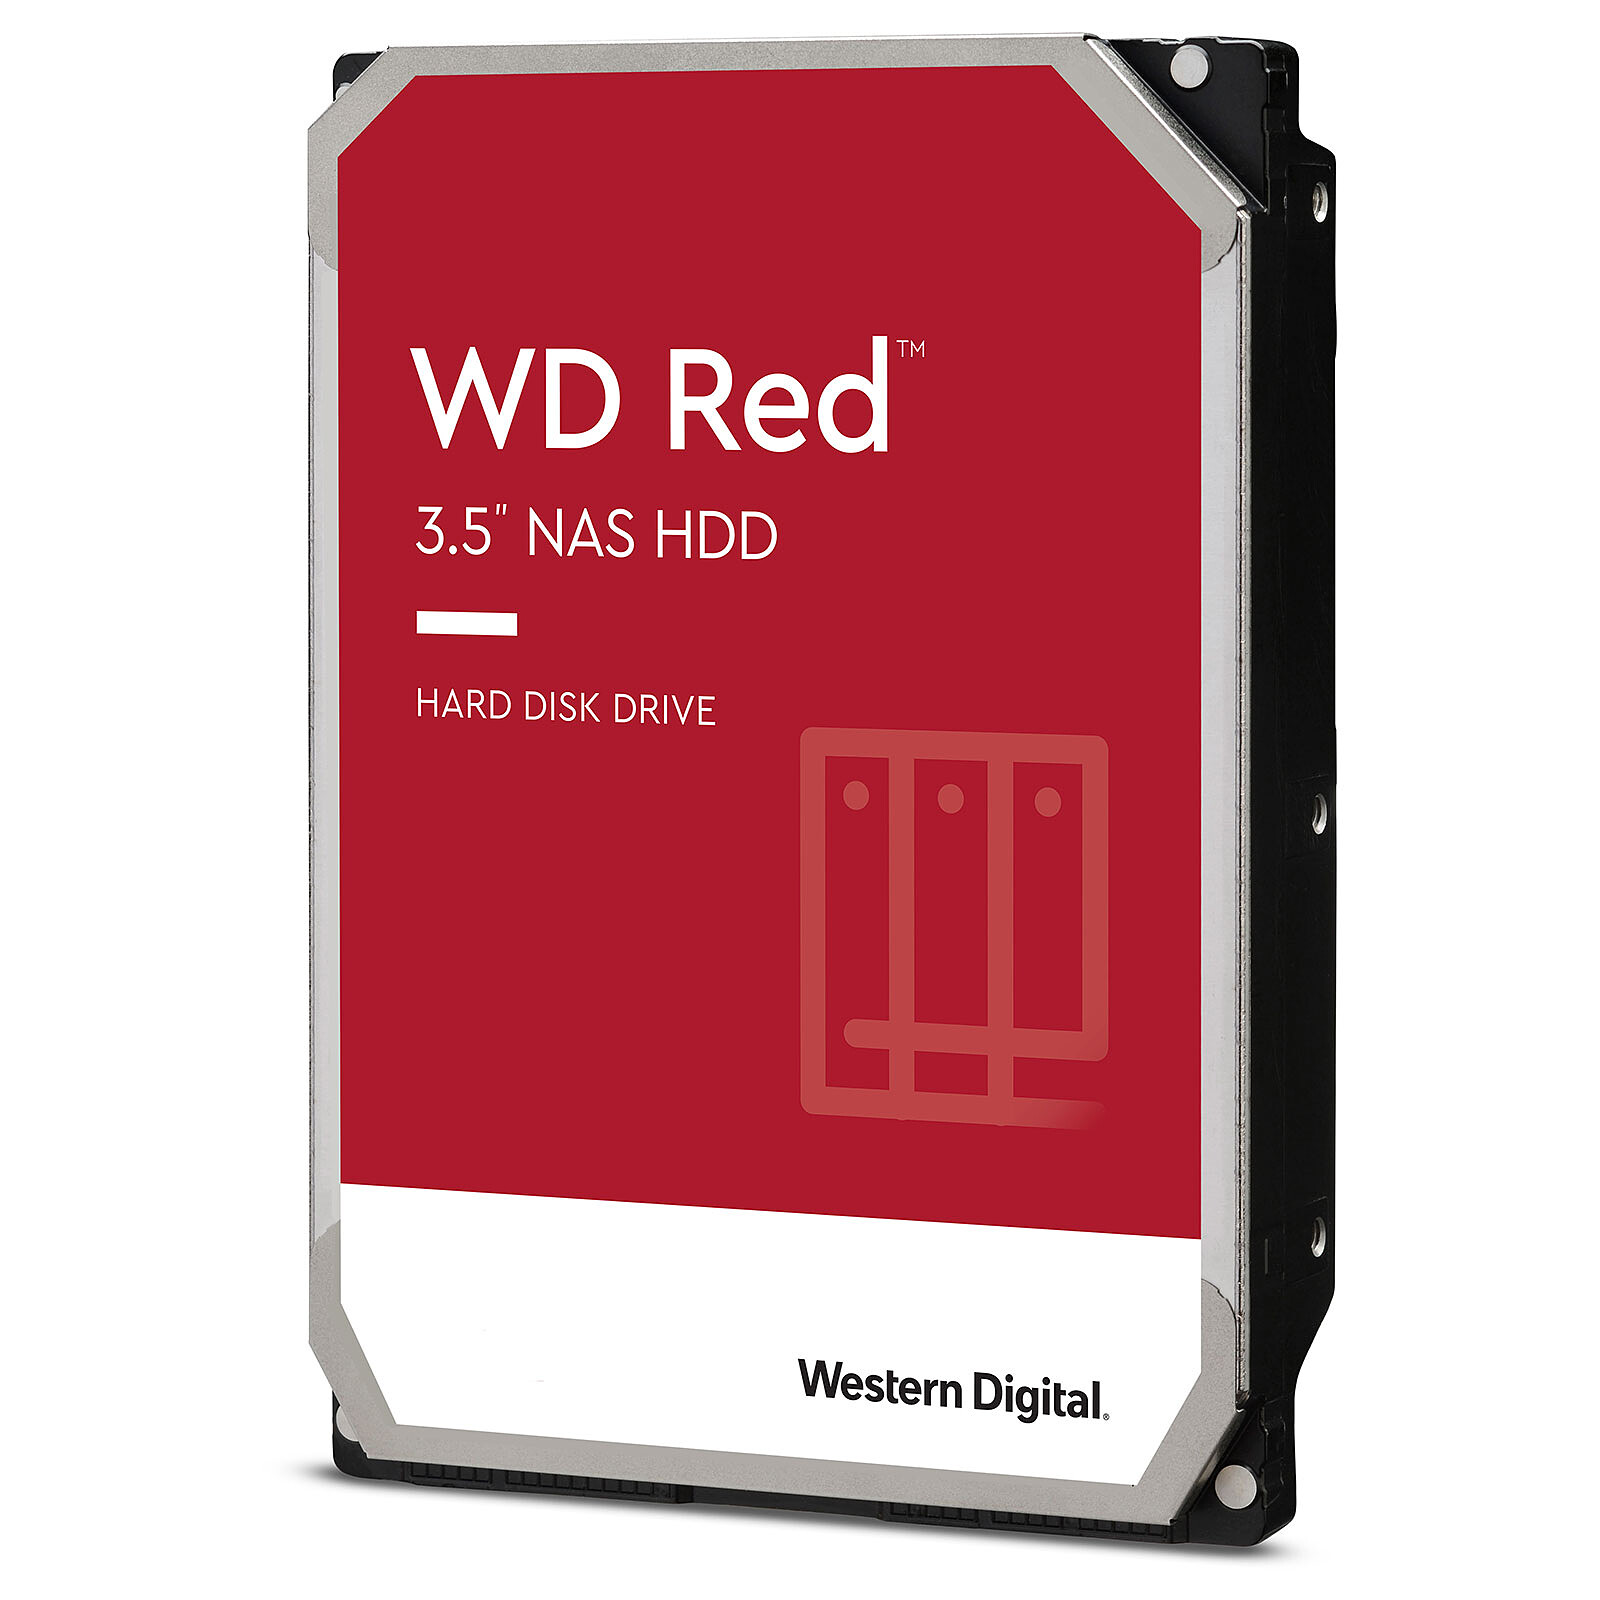 Western Digital WD Red 6 To SATA 6Gb/s